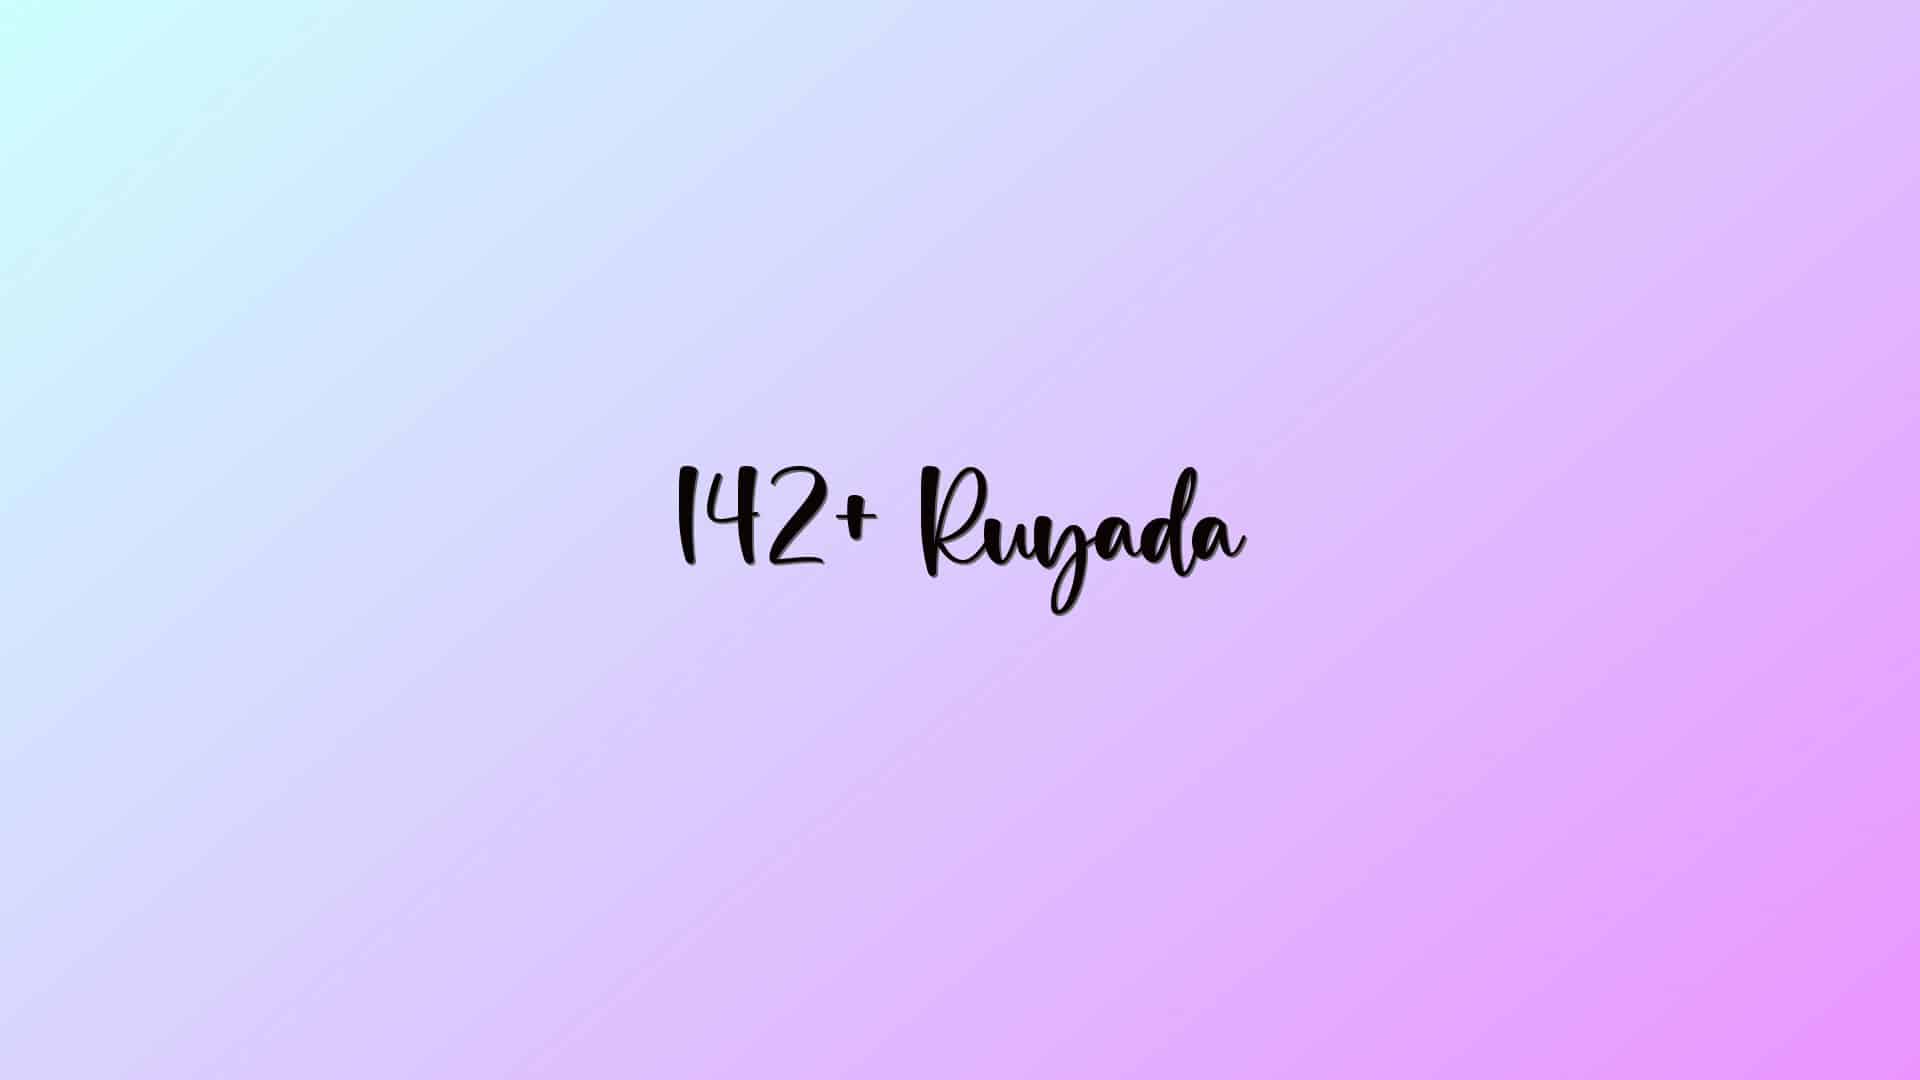 142+ Ruyada